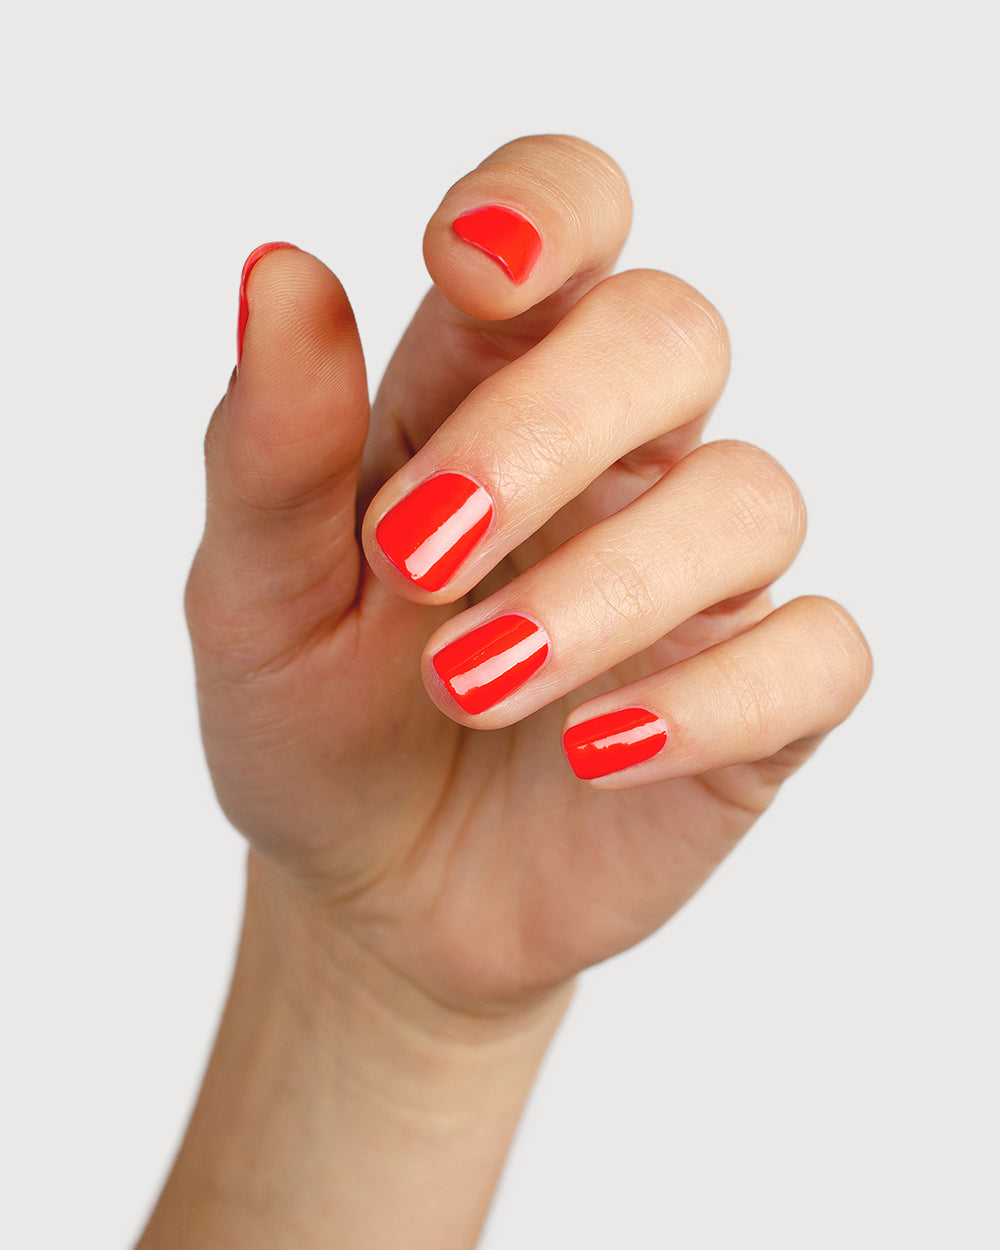 Warm strawberry red nail polish hand swatch on fair skin tone